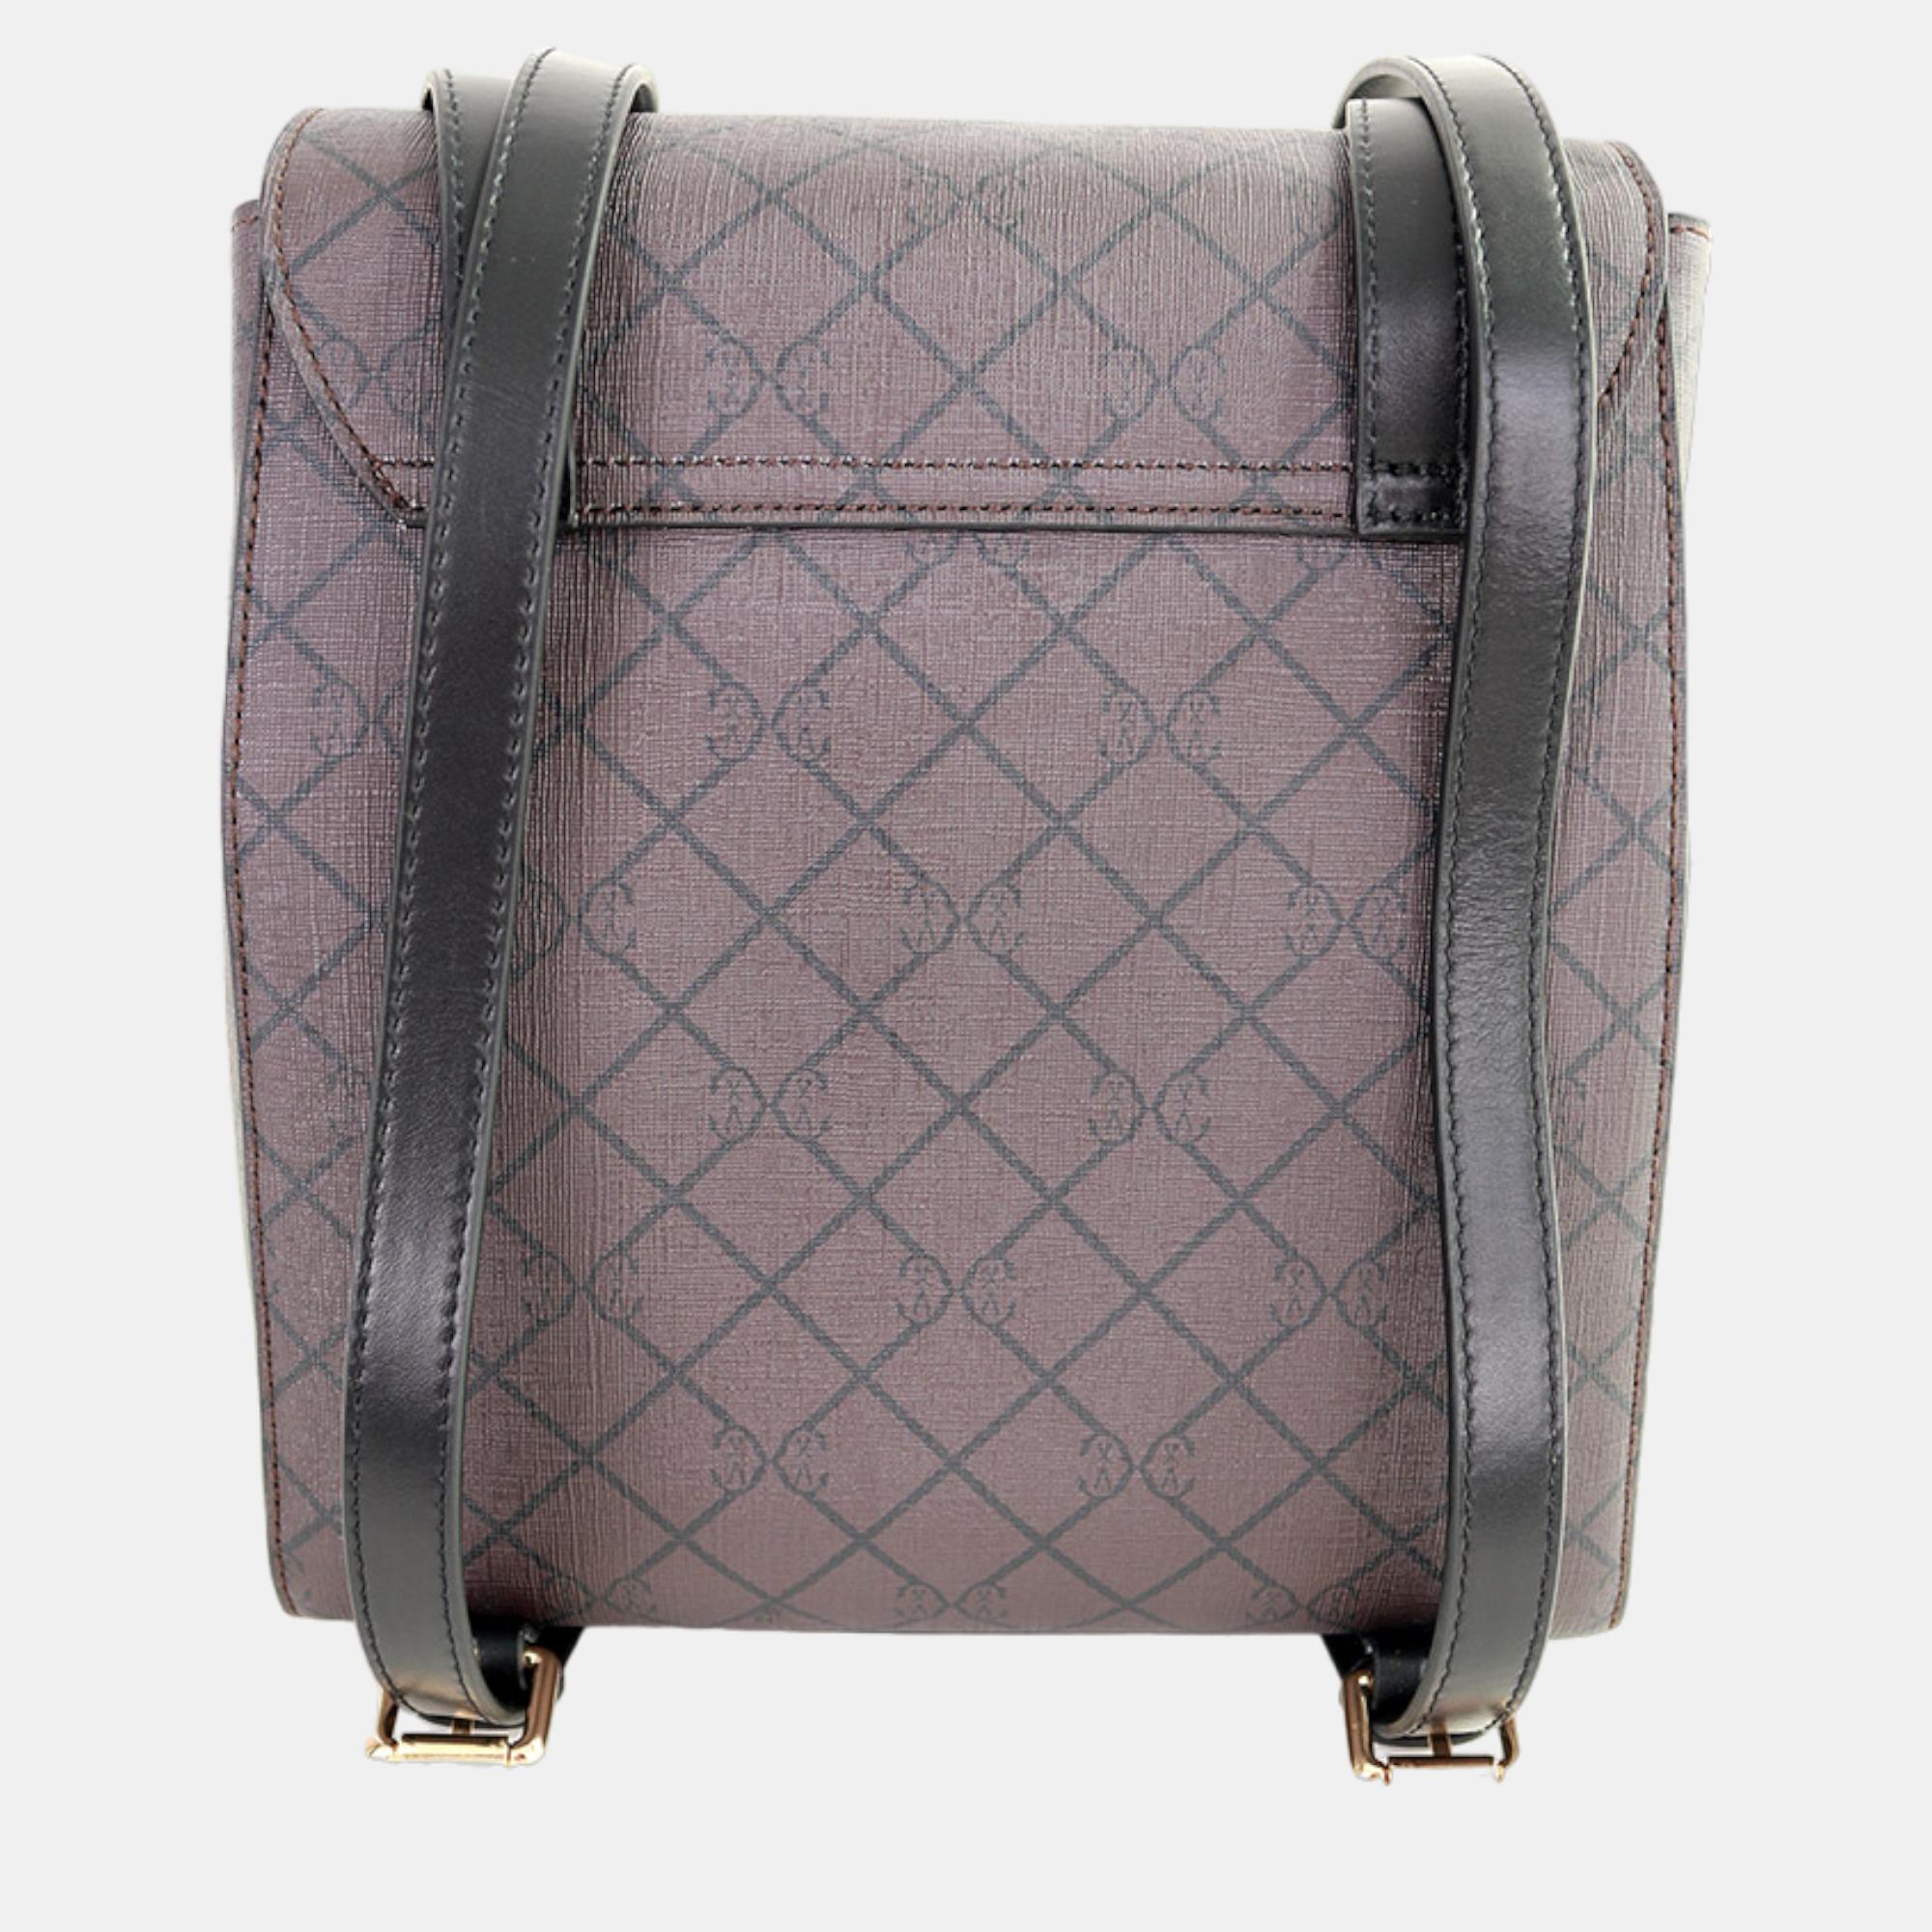 Charriol Dark Brown Leather CALYPSO Handbag